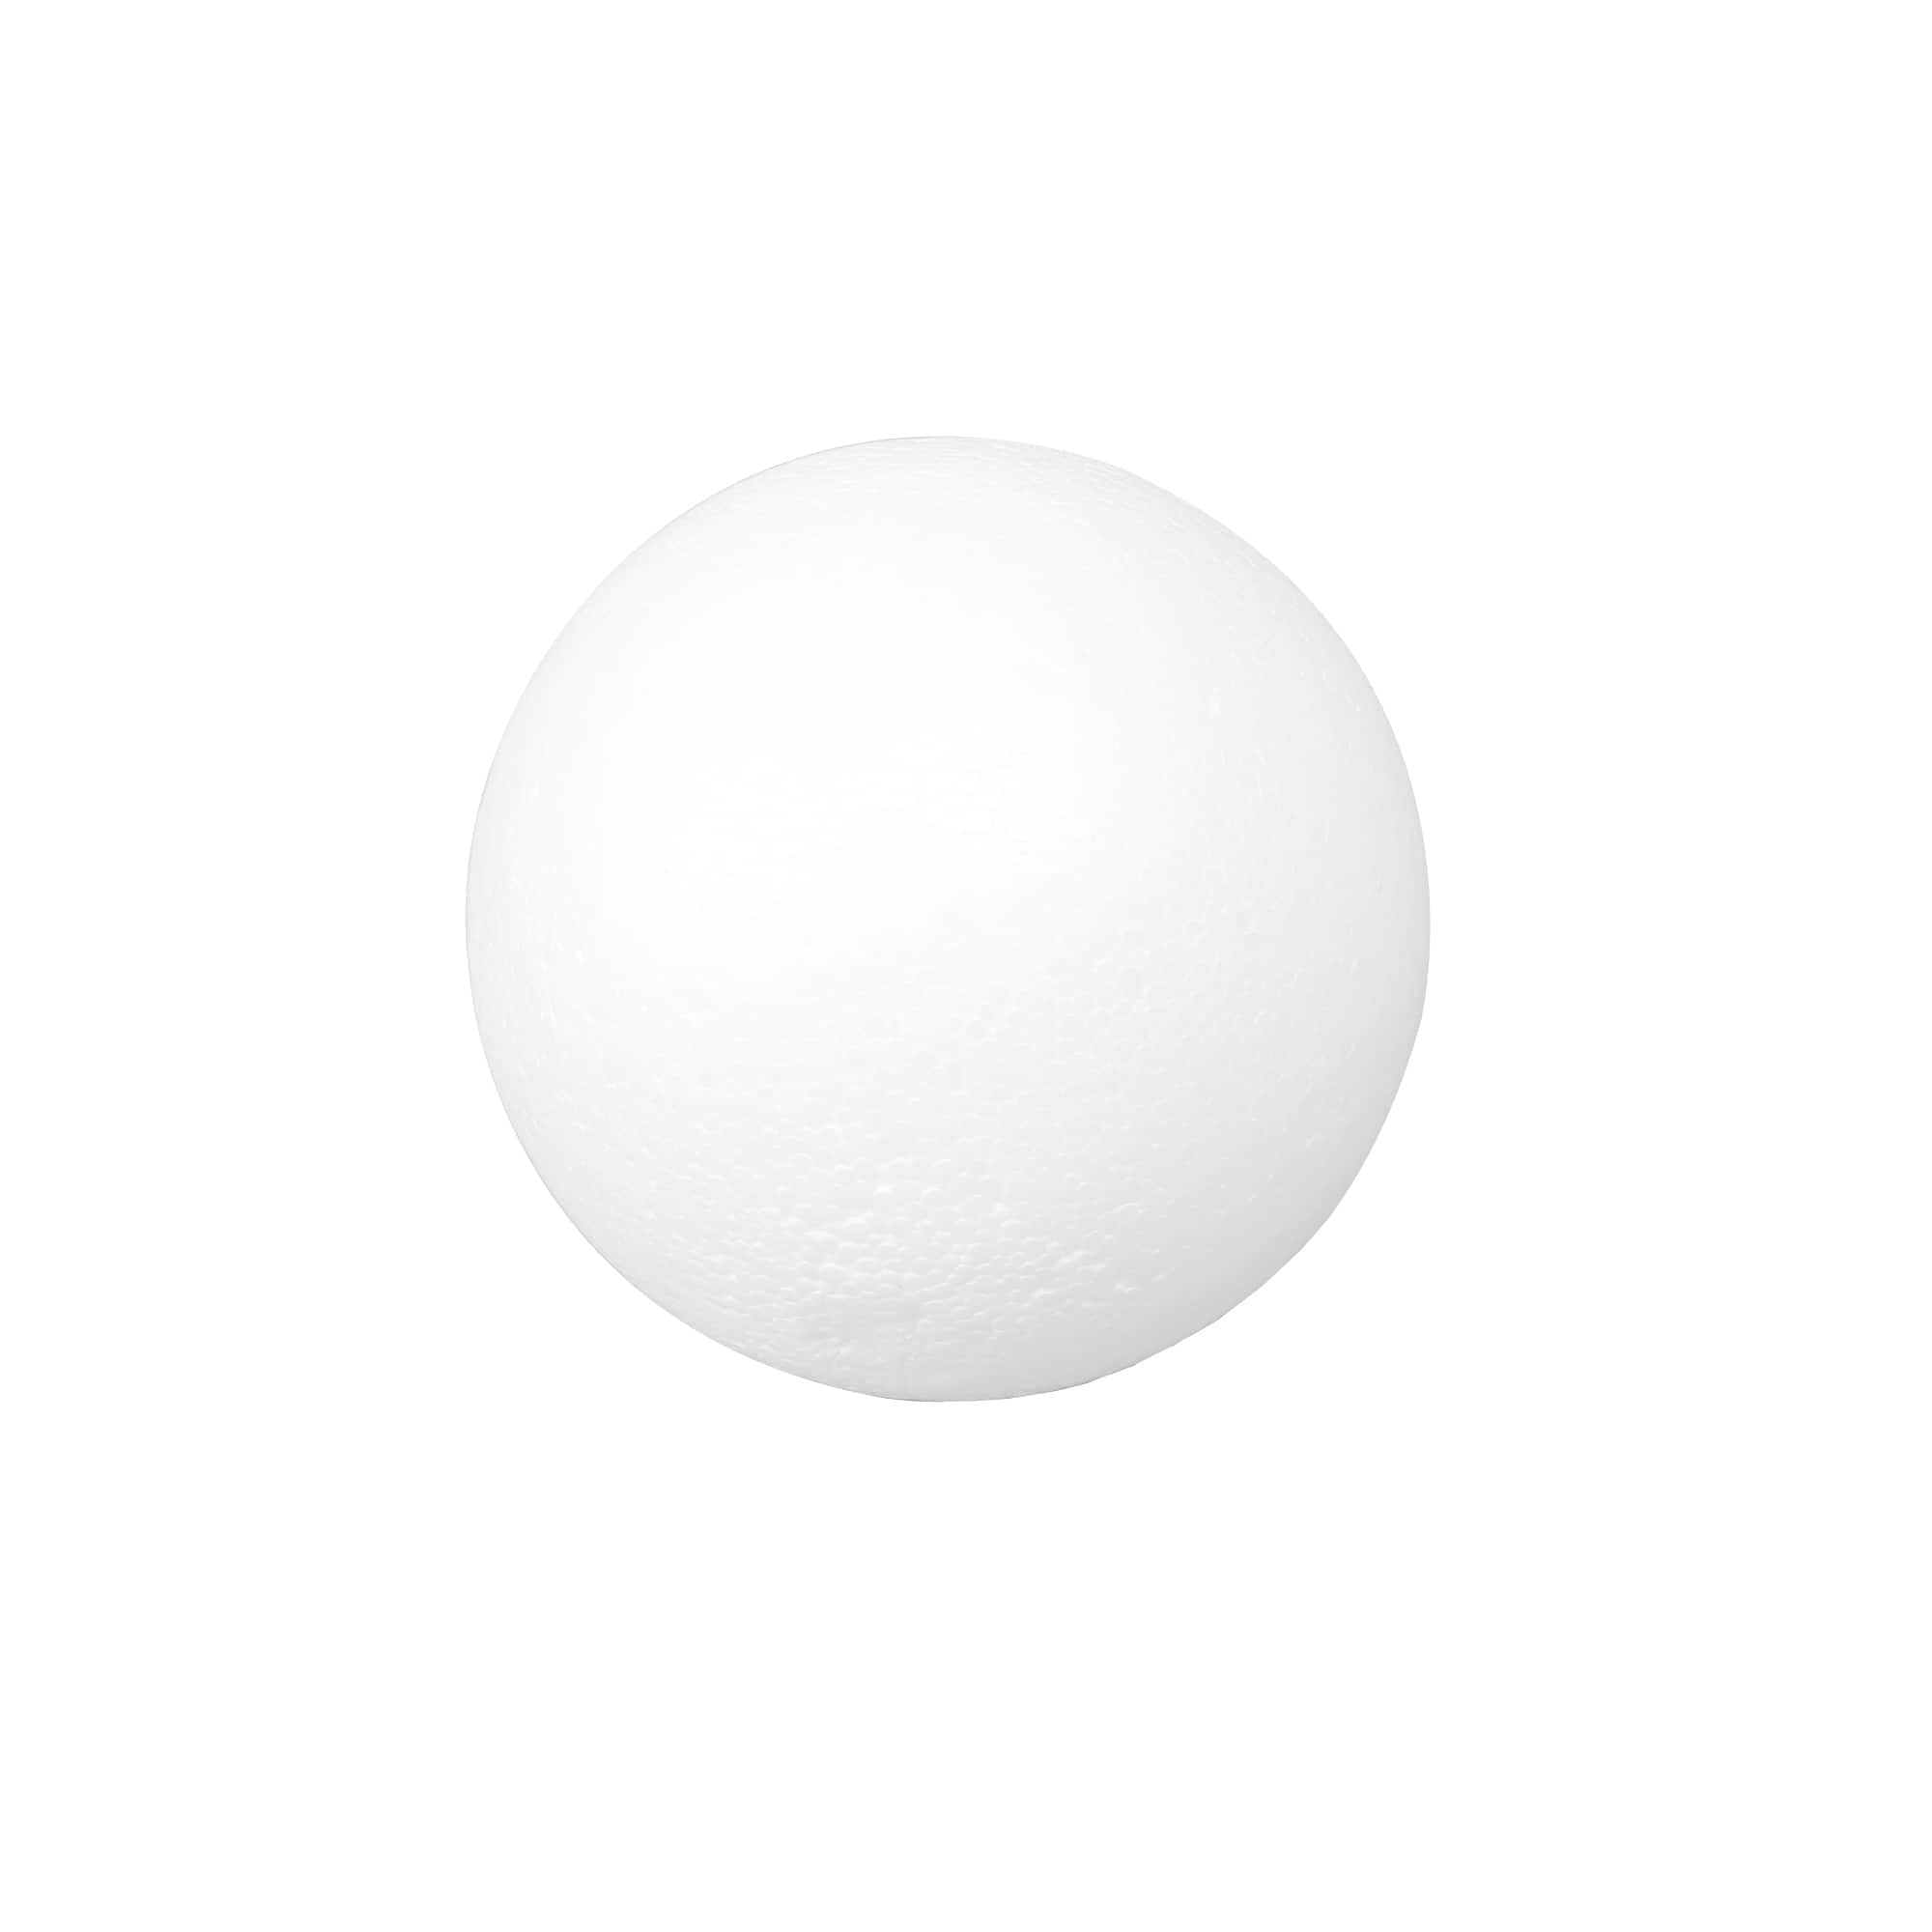 White Foam Male Head by Ashland | 8.8 x 6.2 x 10.3 | Michaels